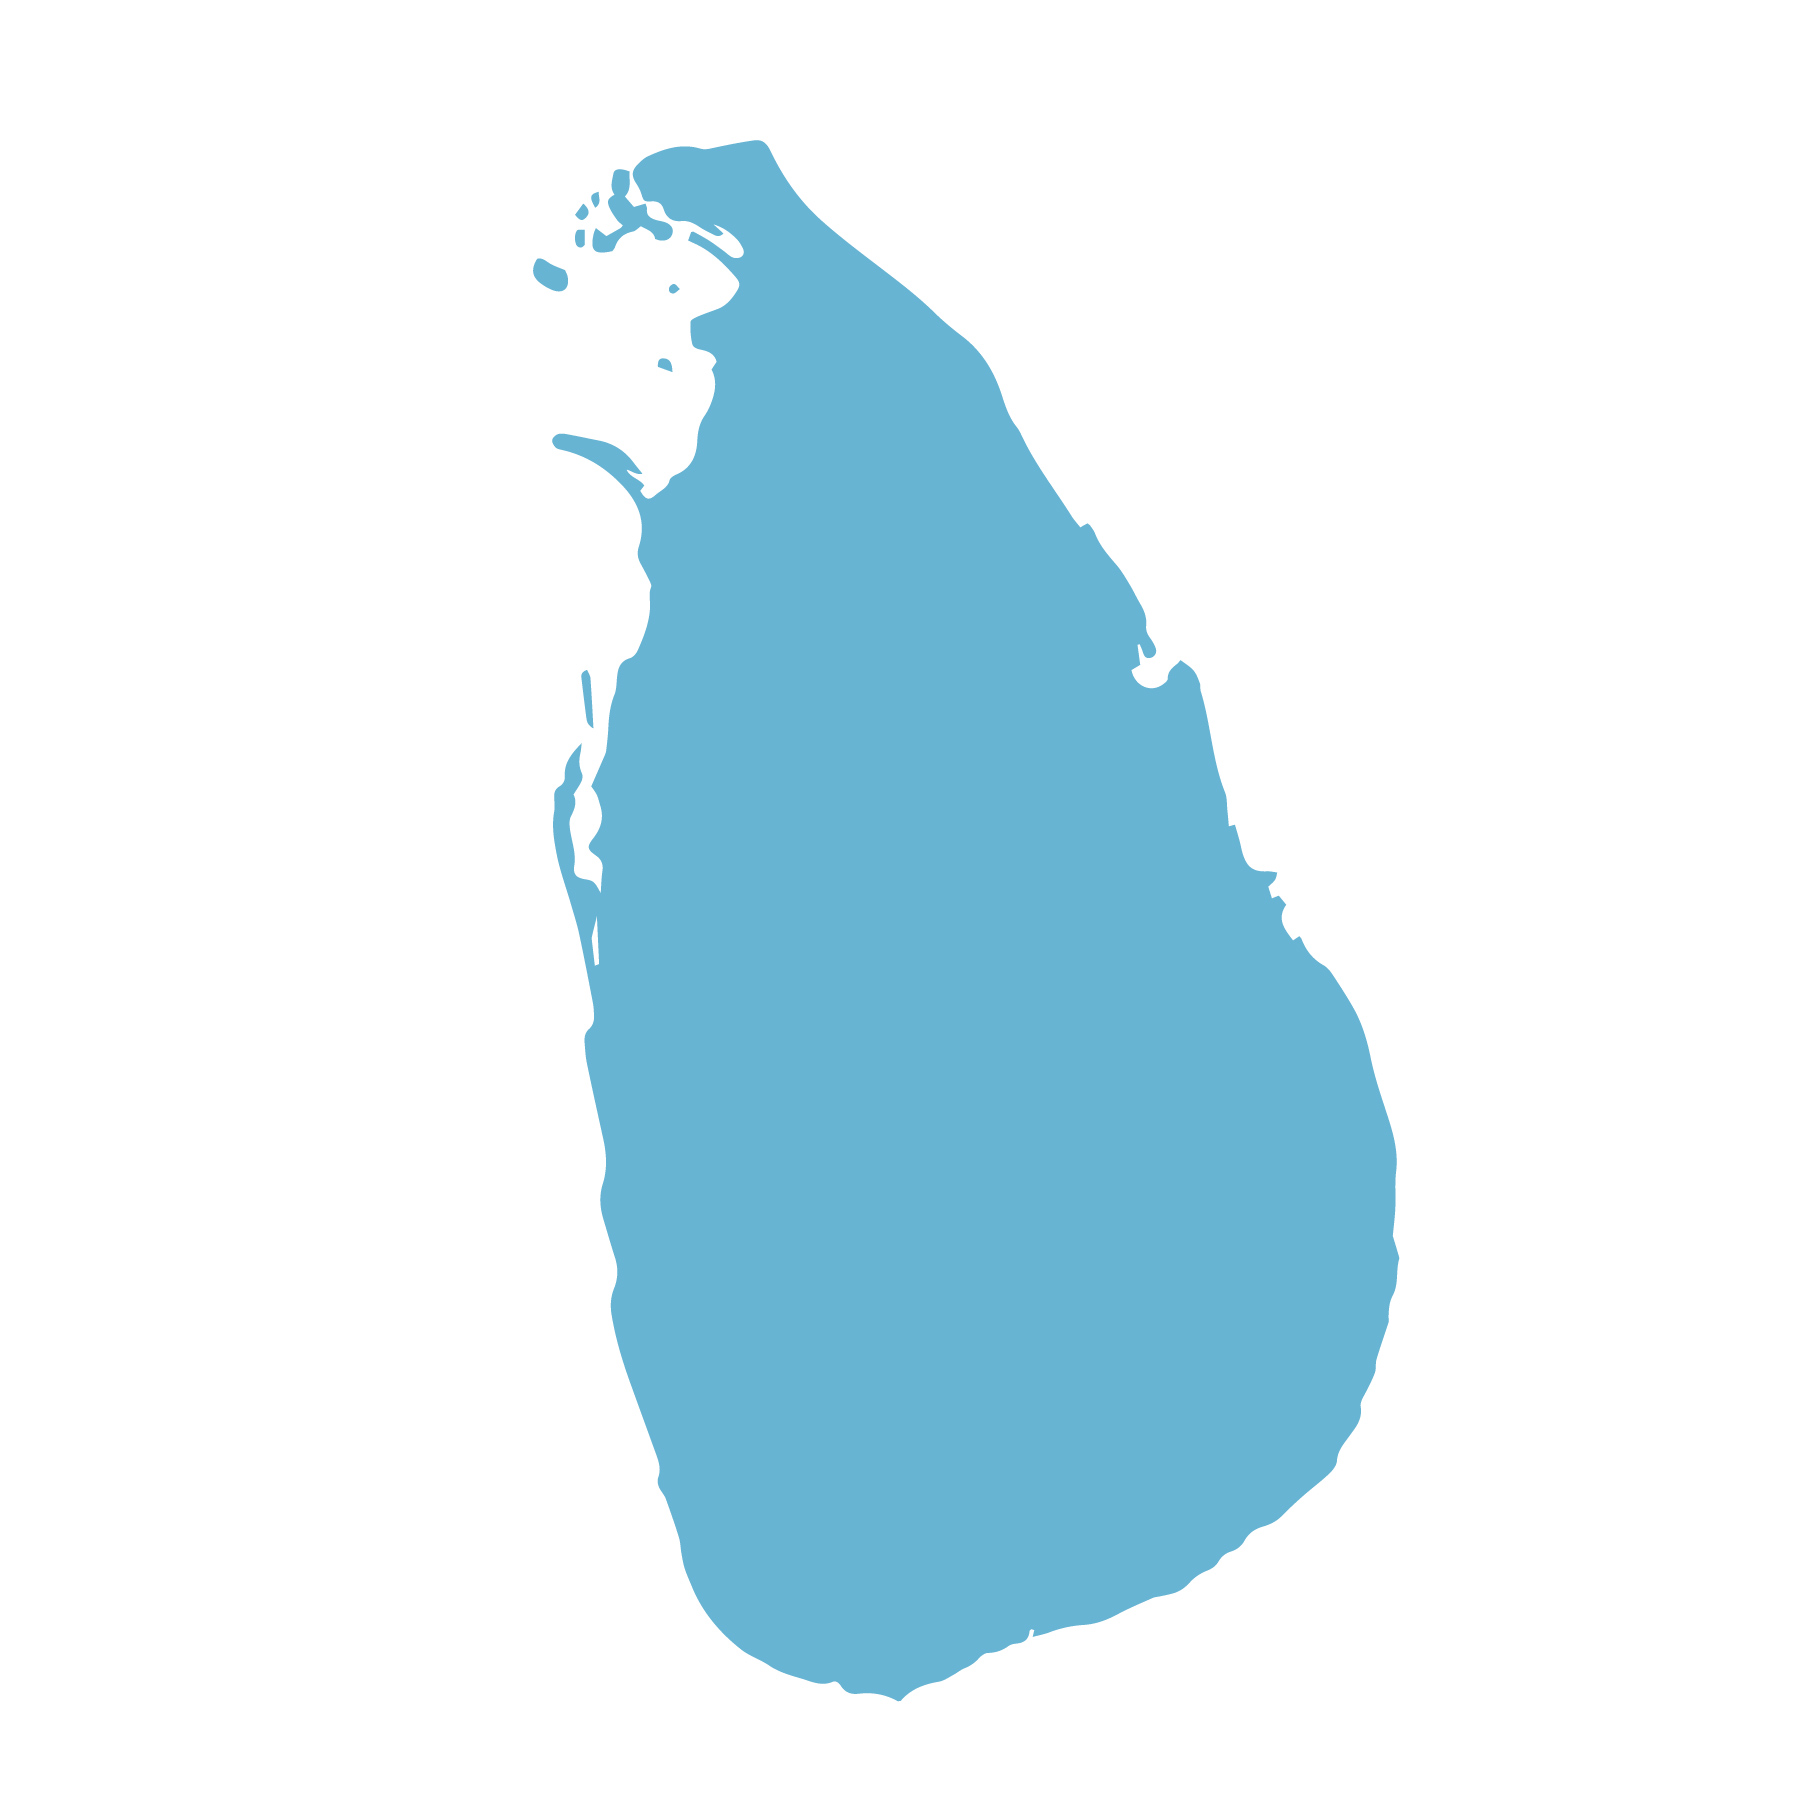 Country icon of Sri Lanka